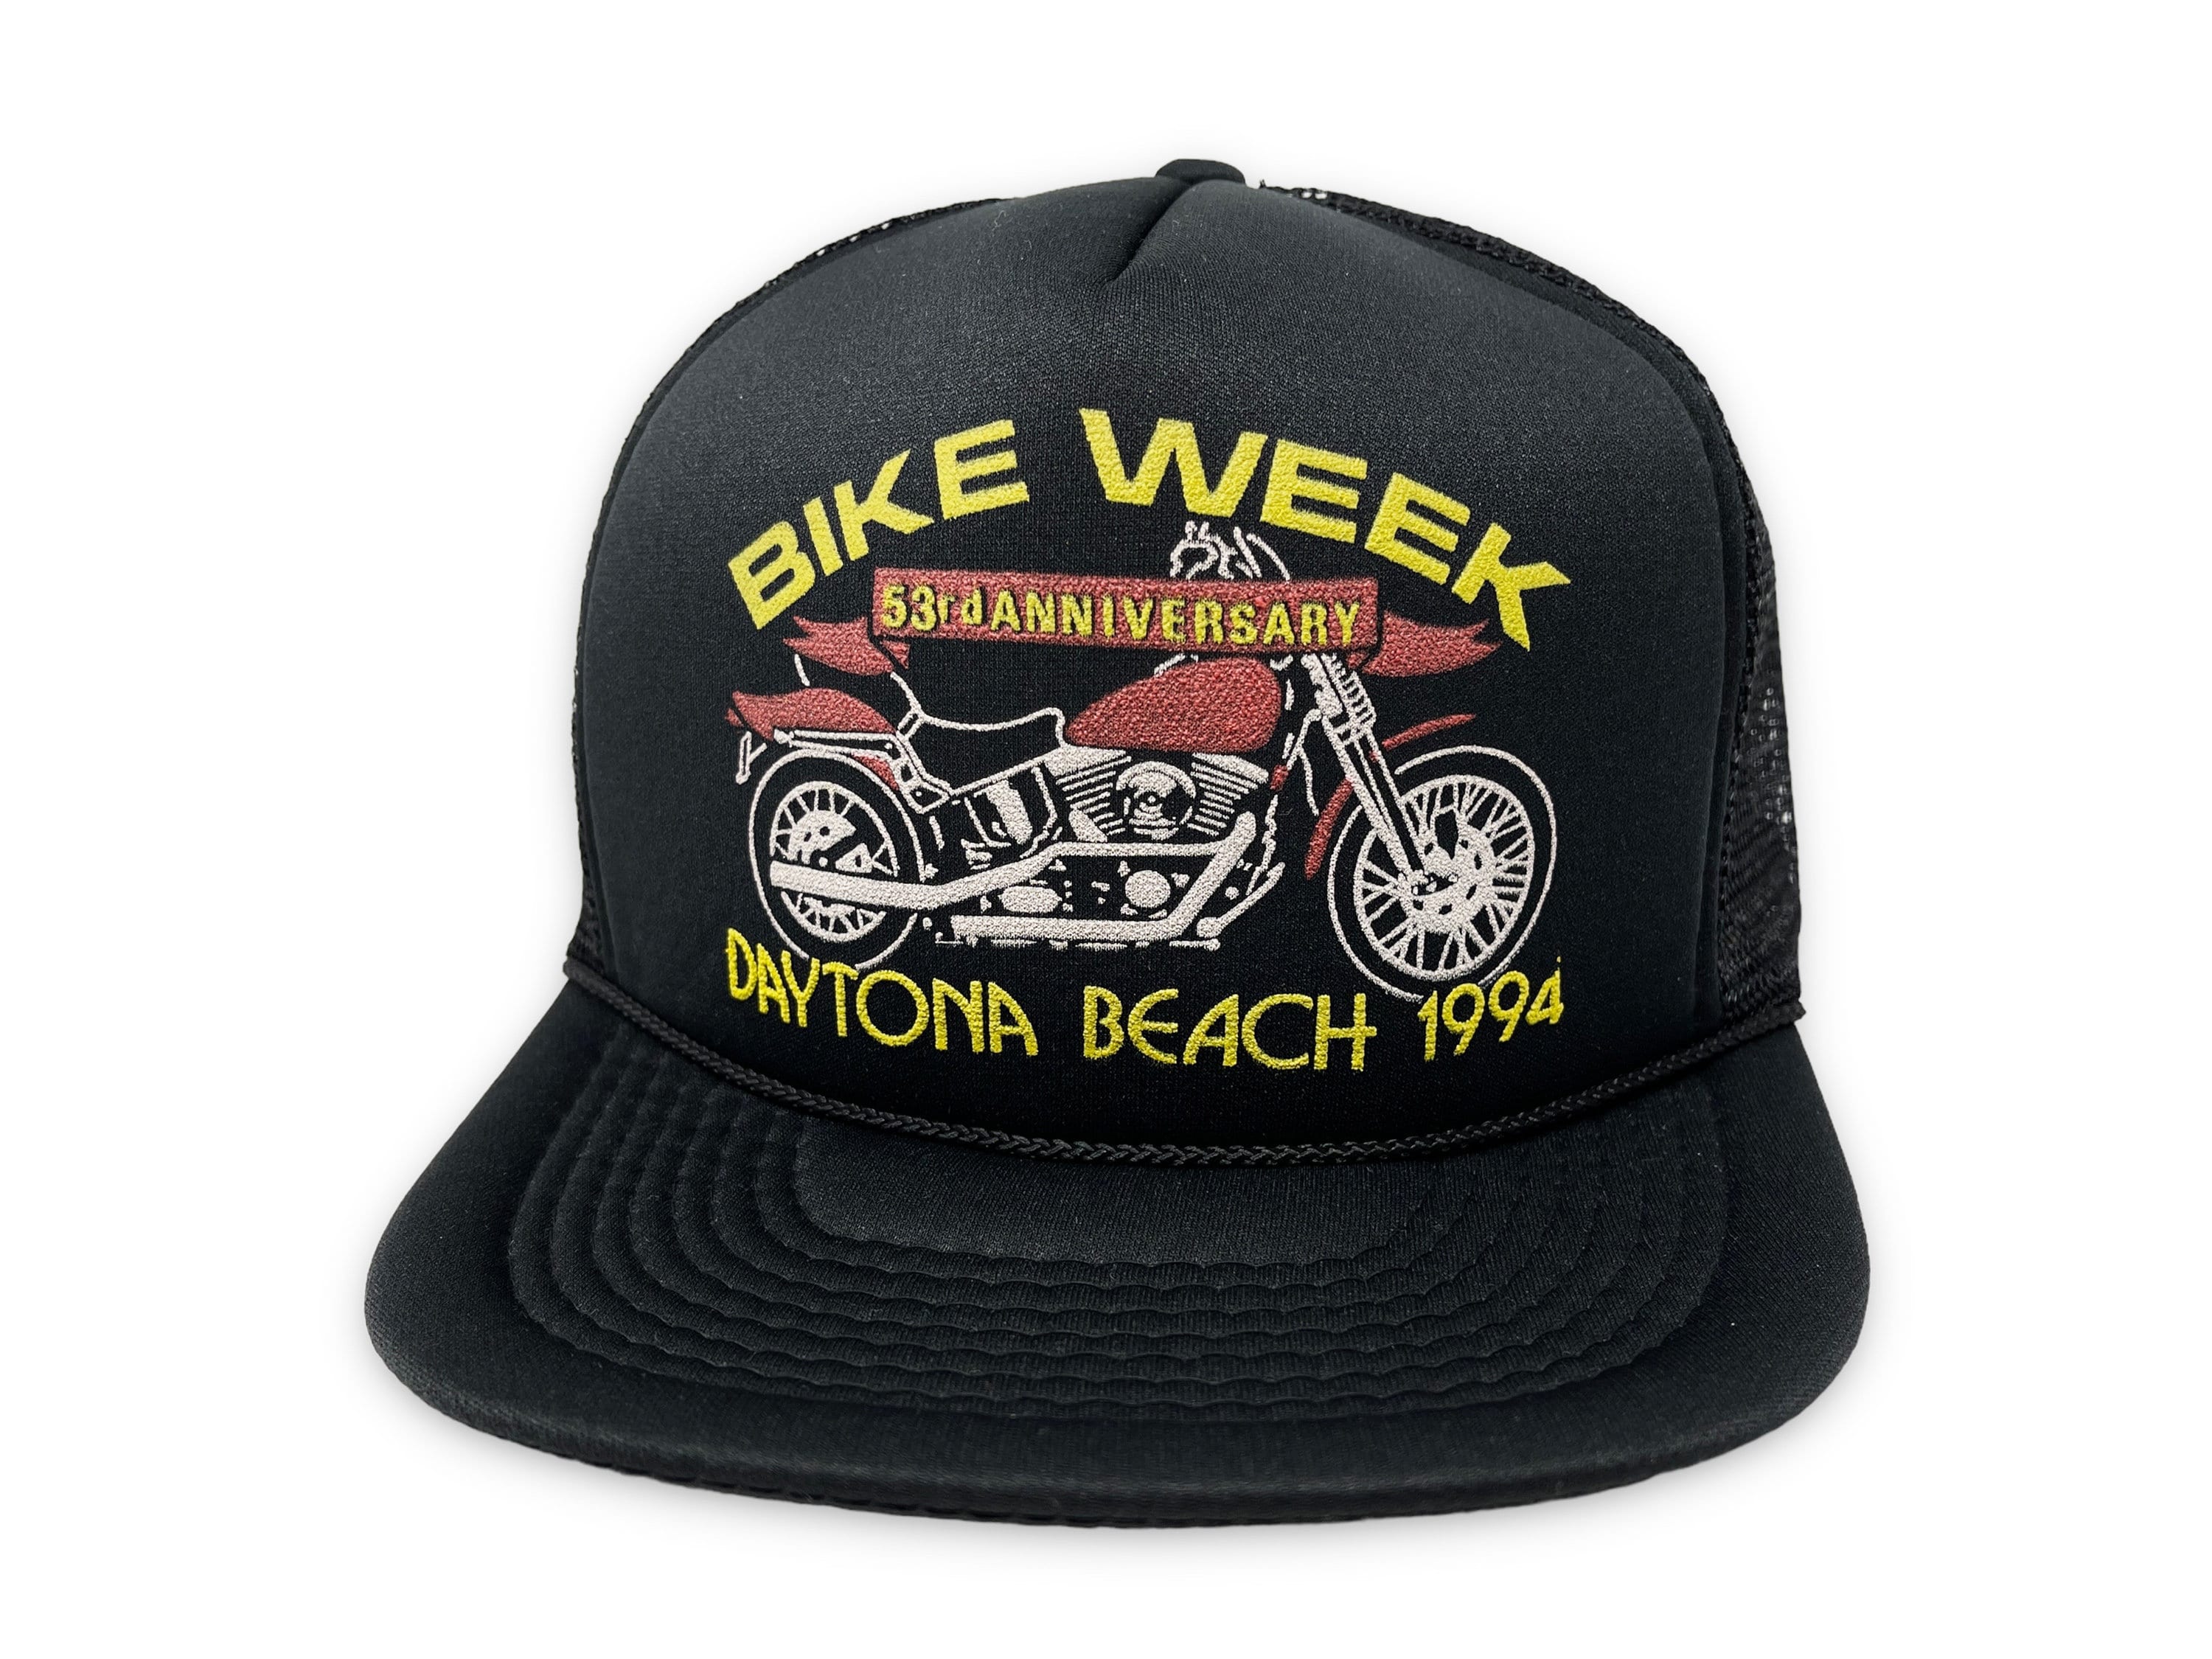 Vintage Daytona Beach Bike Week Hat 90s Trucker Snapback Cap - Etsy